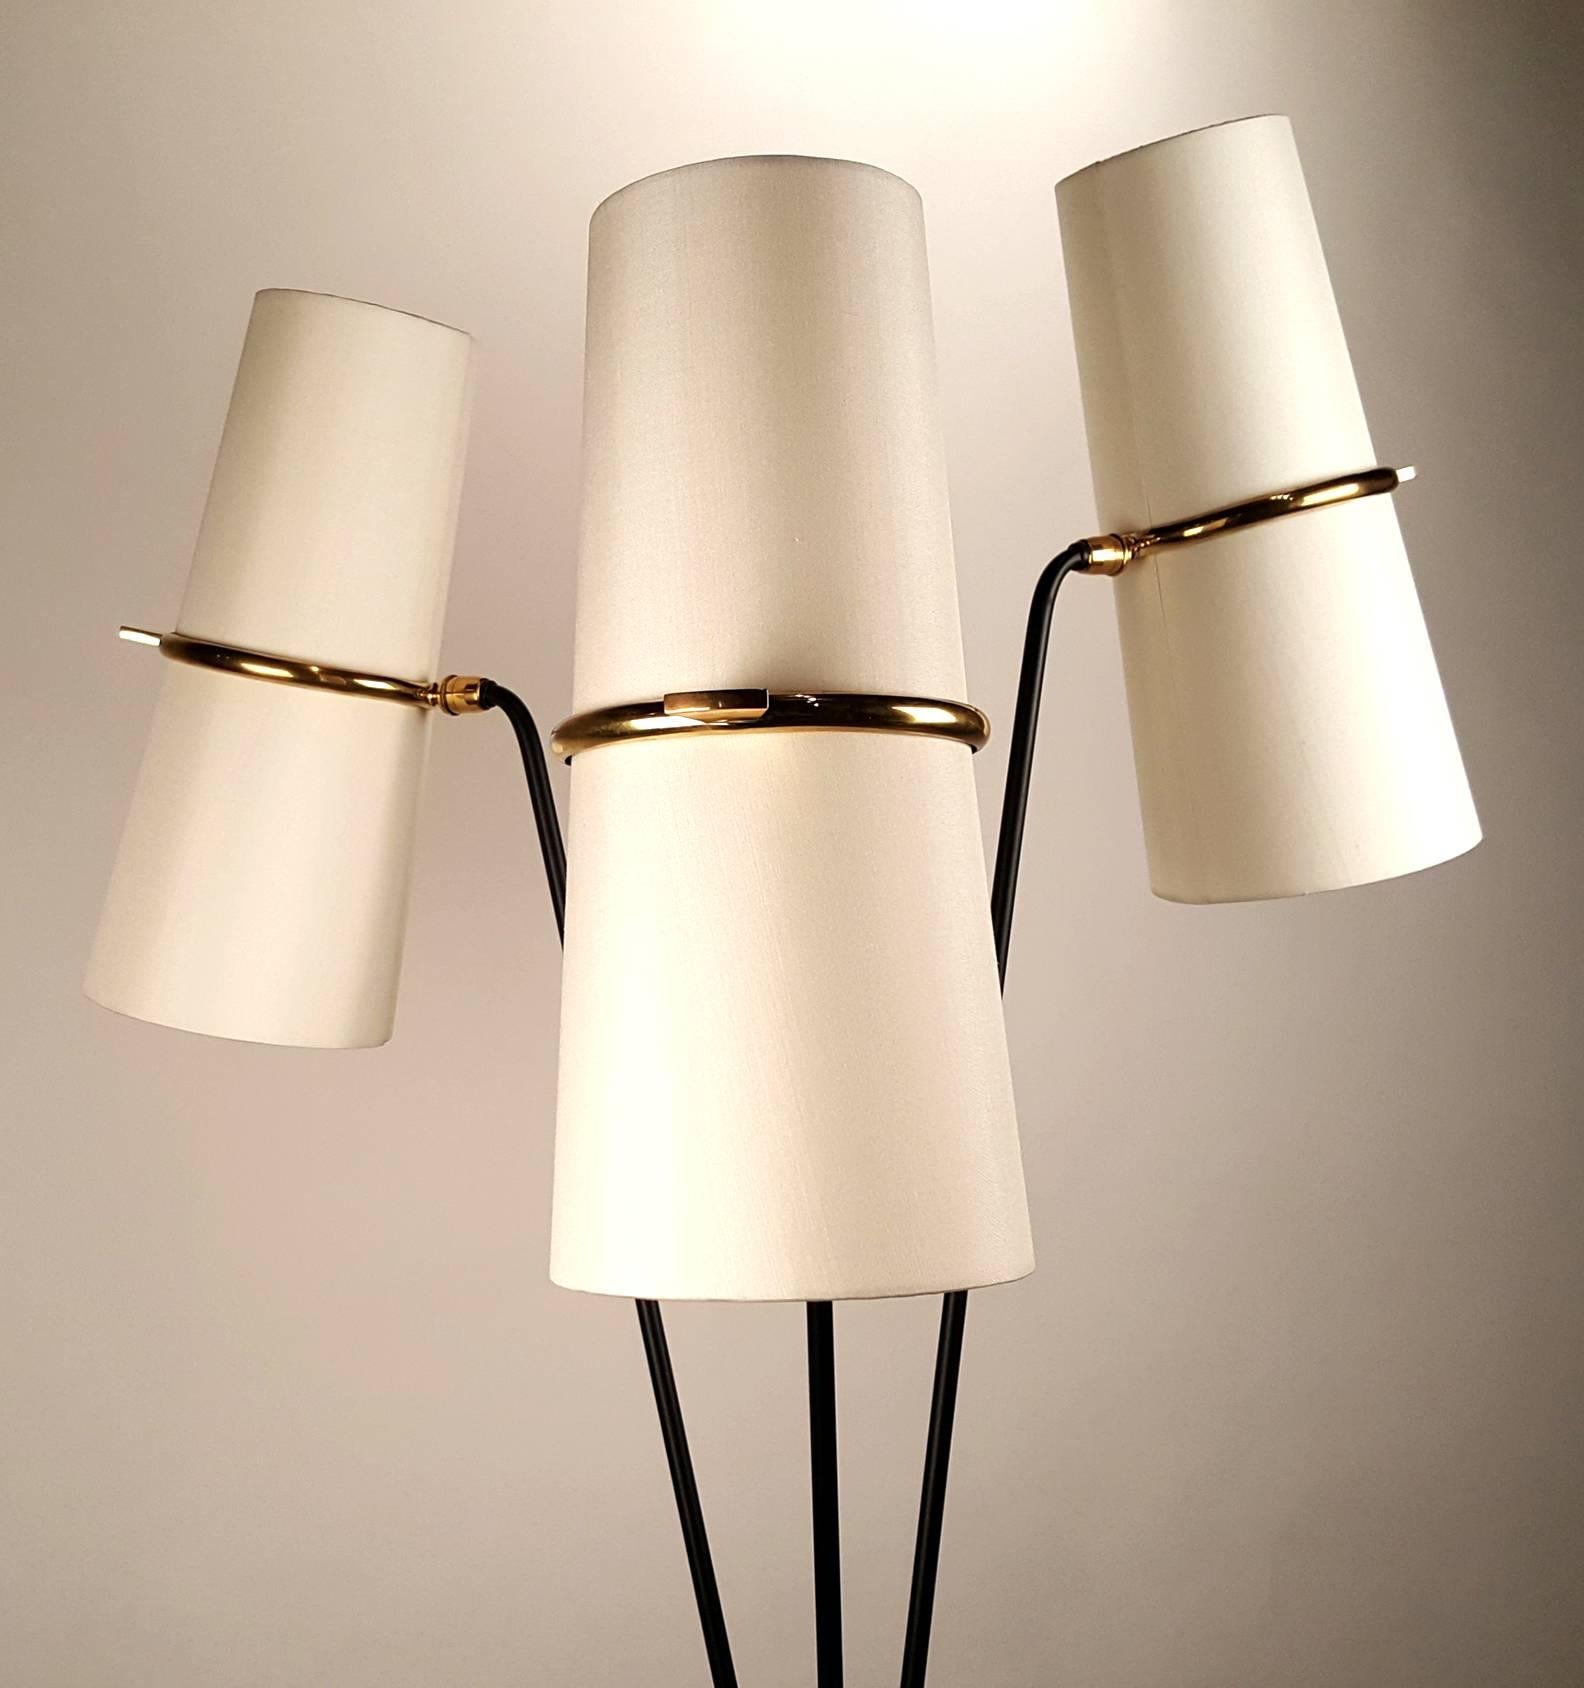 20th Century Elegant French Modernist Three-Arm Floor Lamp By Maison Lunel